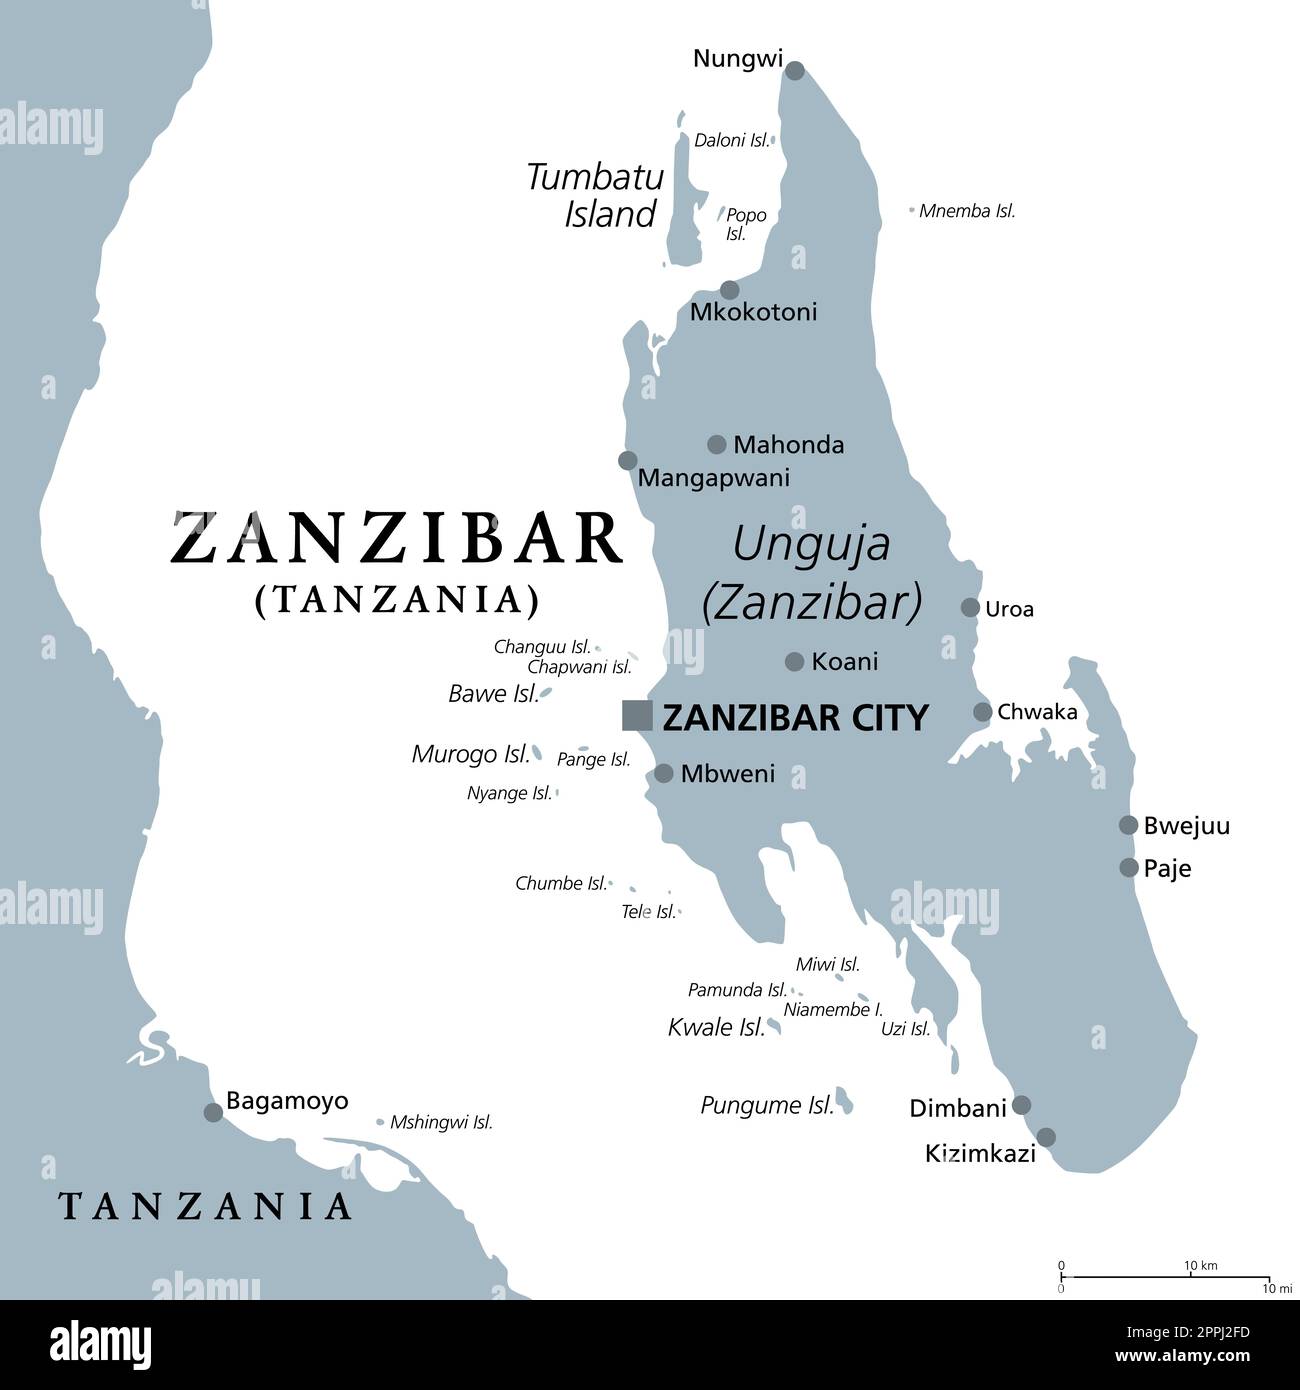 Zanzibar Island, Unguja, Tanzania, gray political map. Largest, most populated island of the Zanzibar Archipelago in the Indian Ocean. Stock Photo